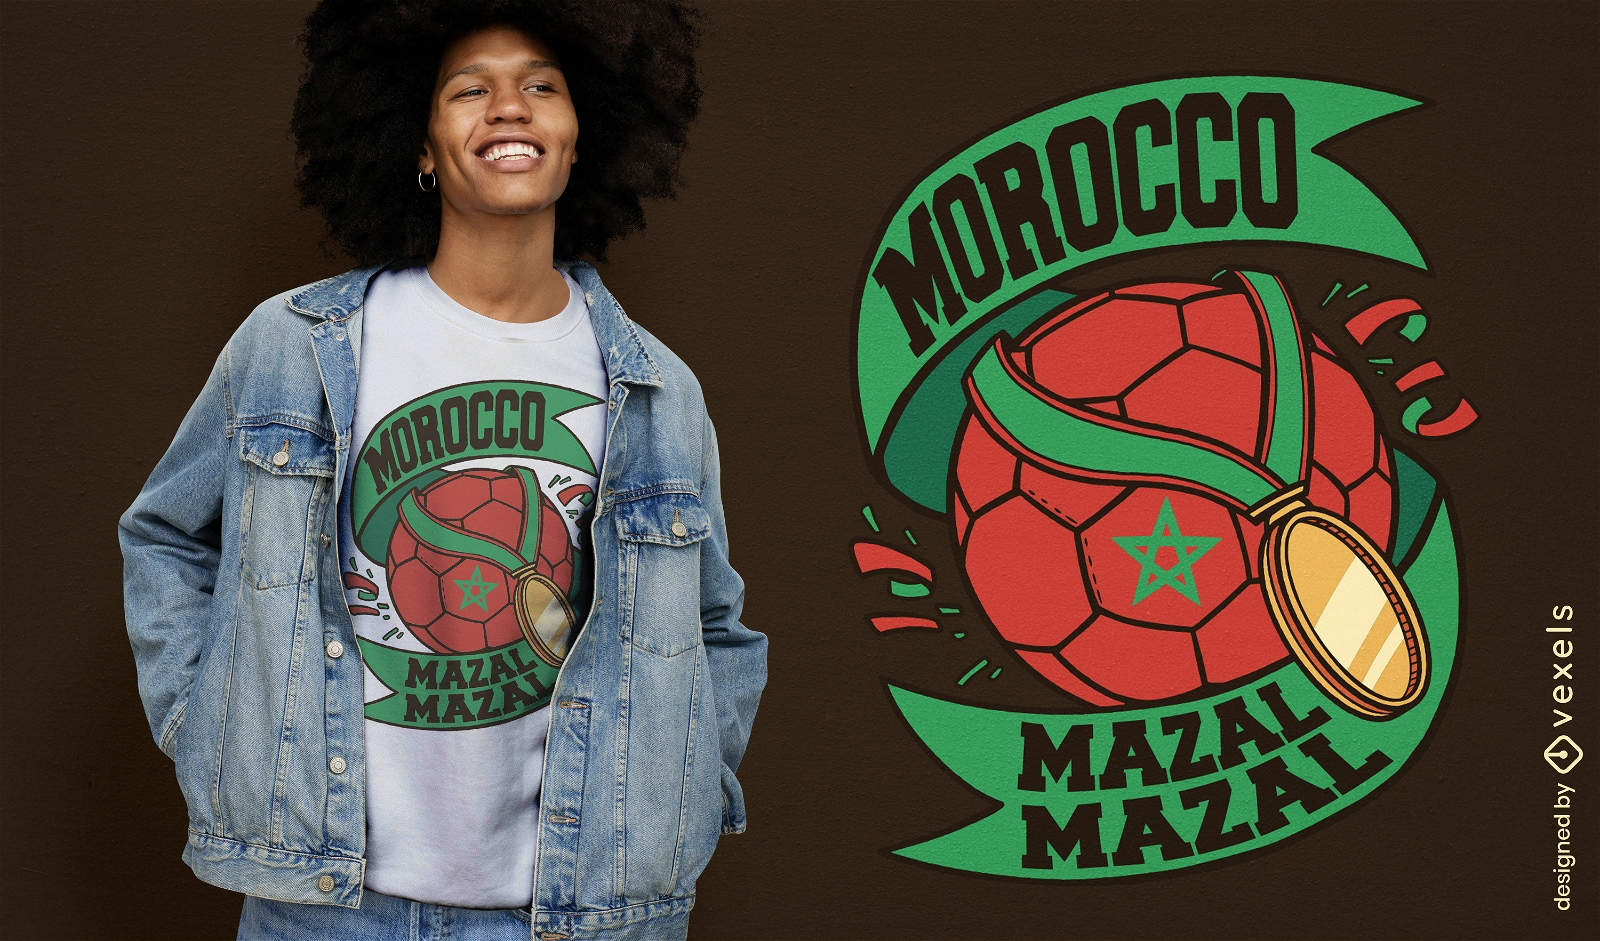 Morocco soccer team t-shirt design